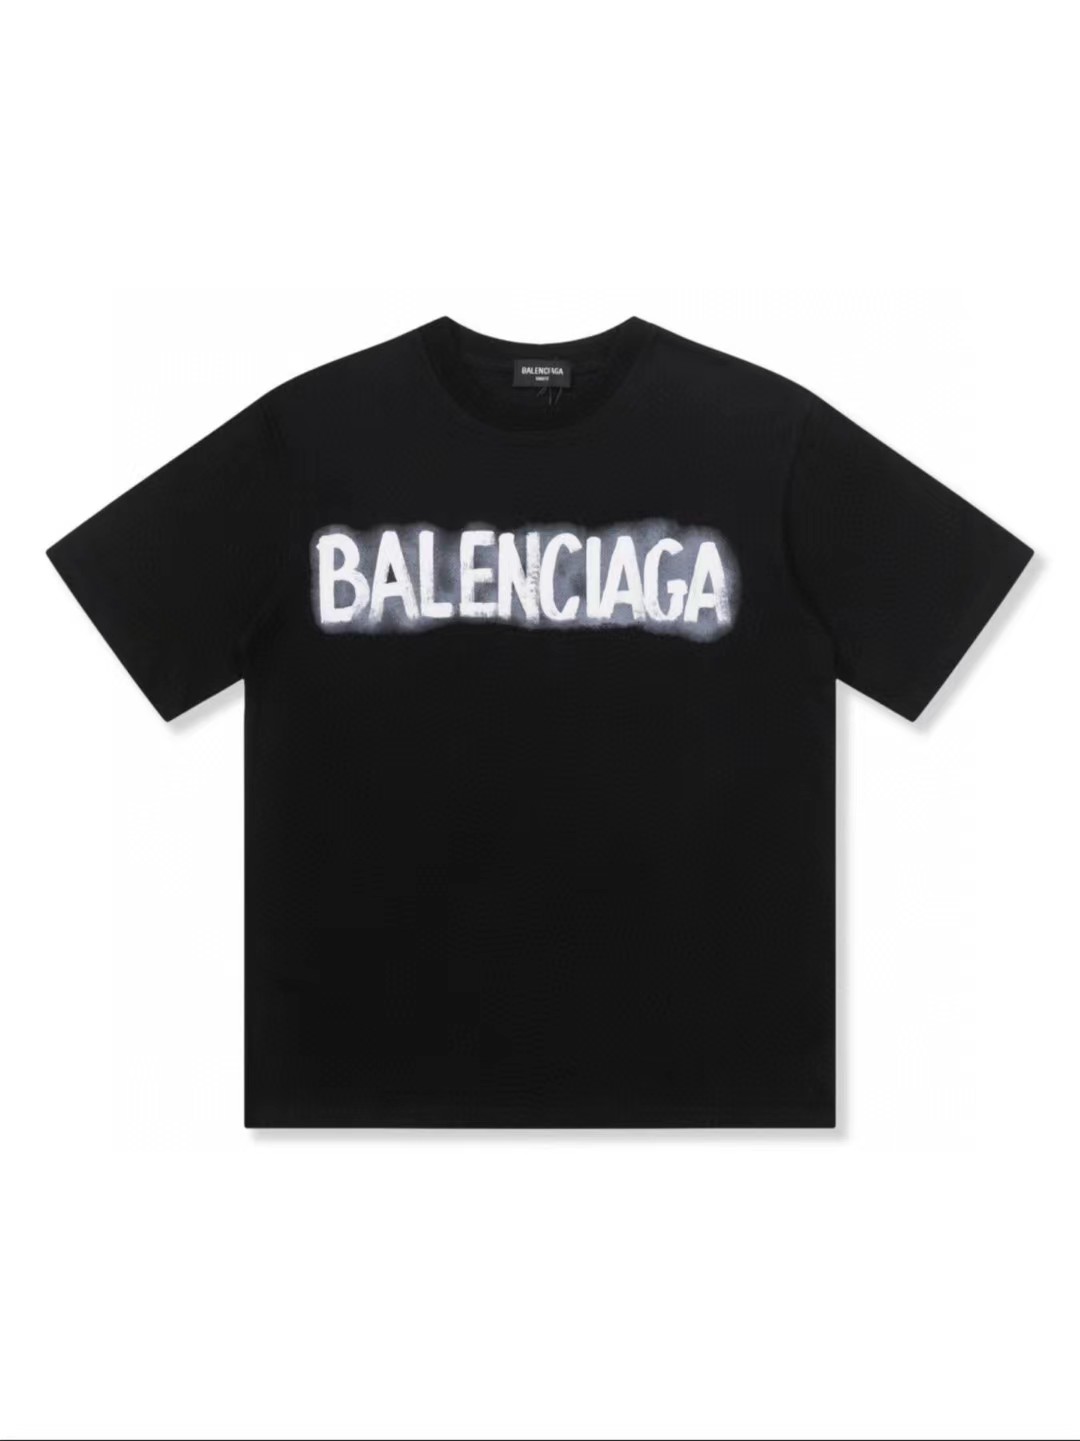 Balenciaga Clothing T-Shirt Black Doodle White Printing Combed Cotton Short Sleeve